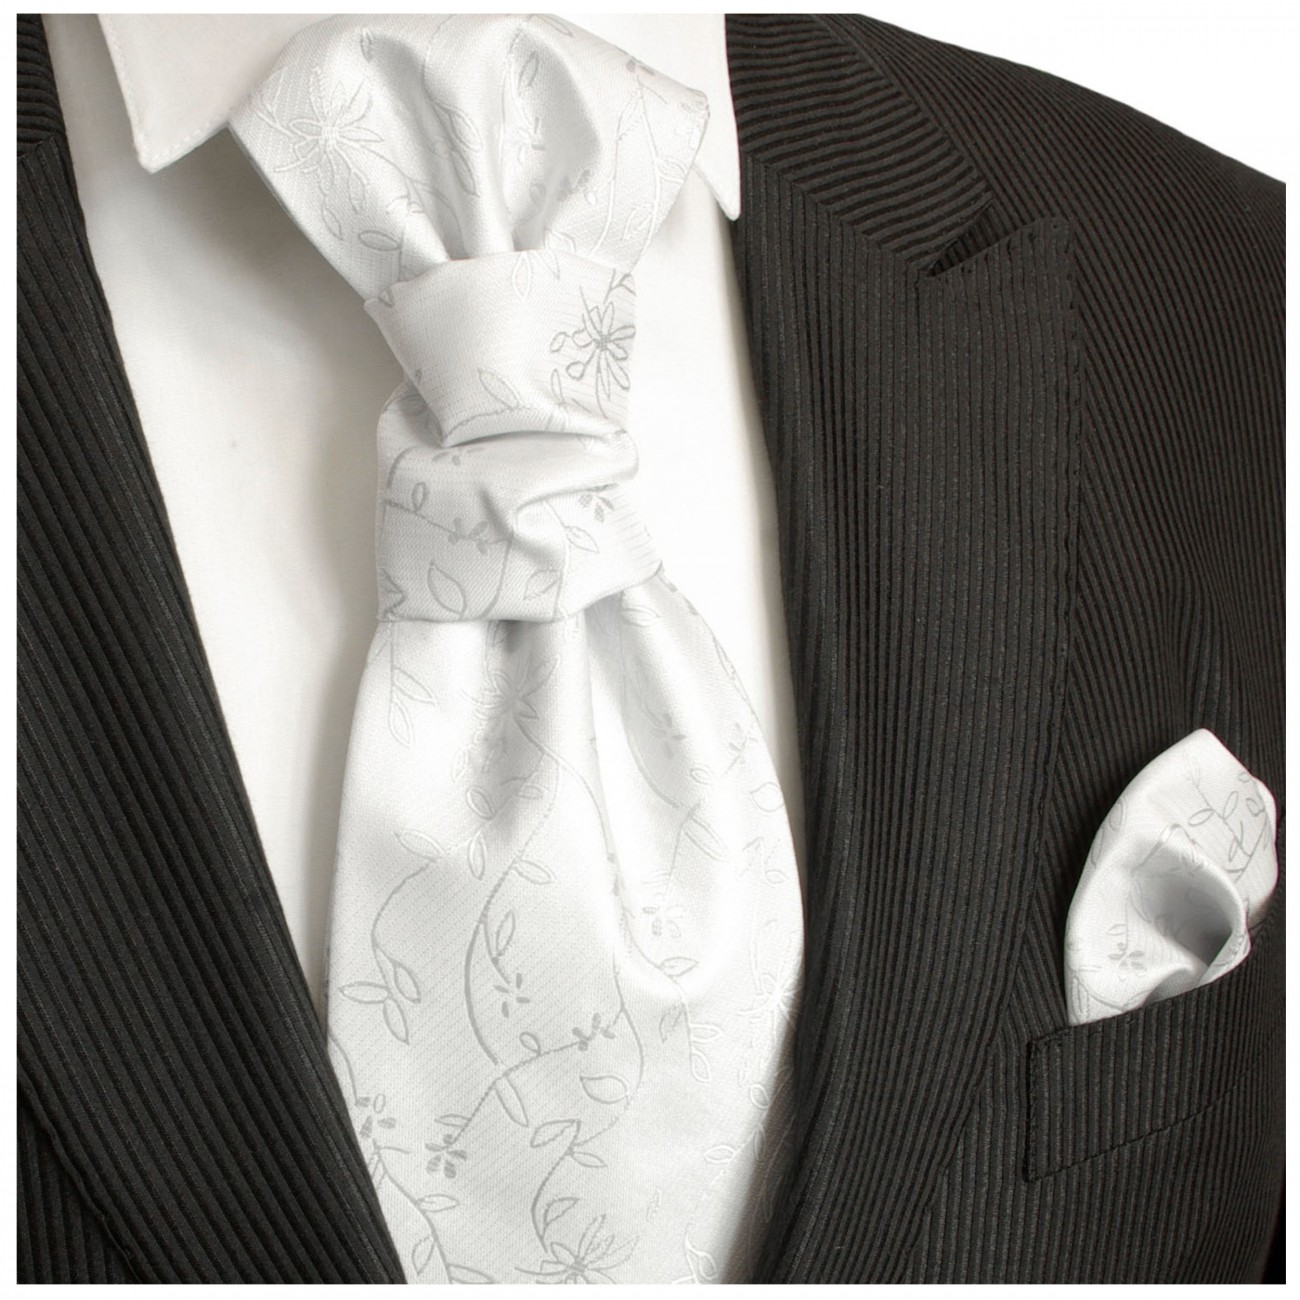 Cravat Ascot UK Made Silver Grey White Polka Dot+Hanky.Premium Cotton. 